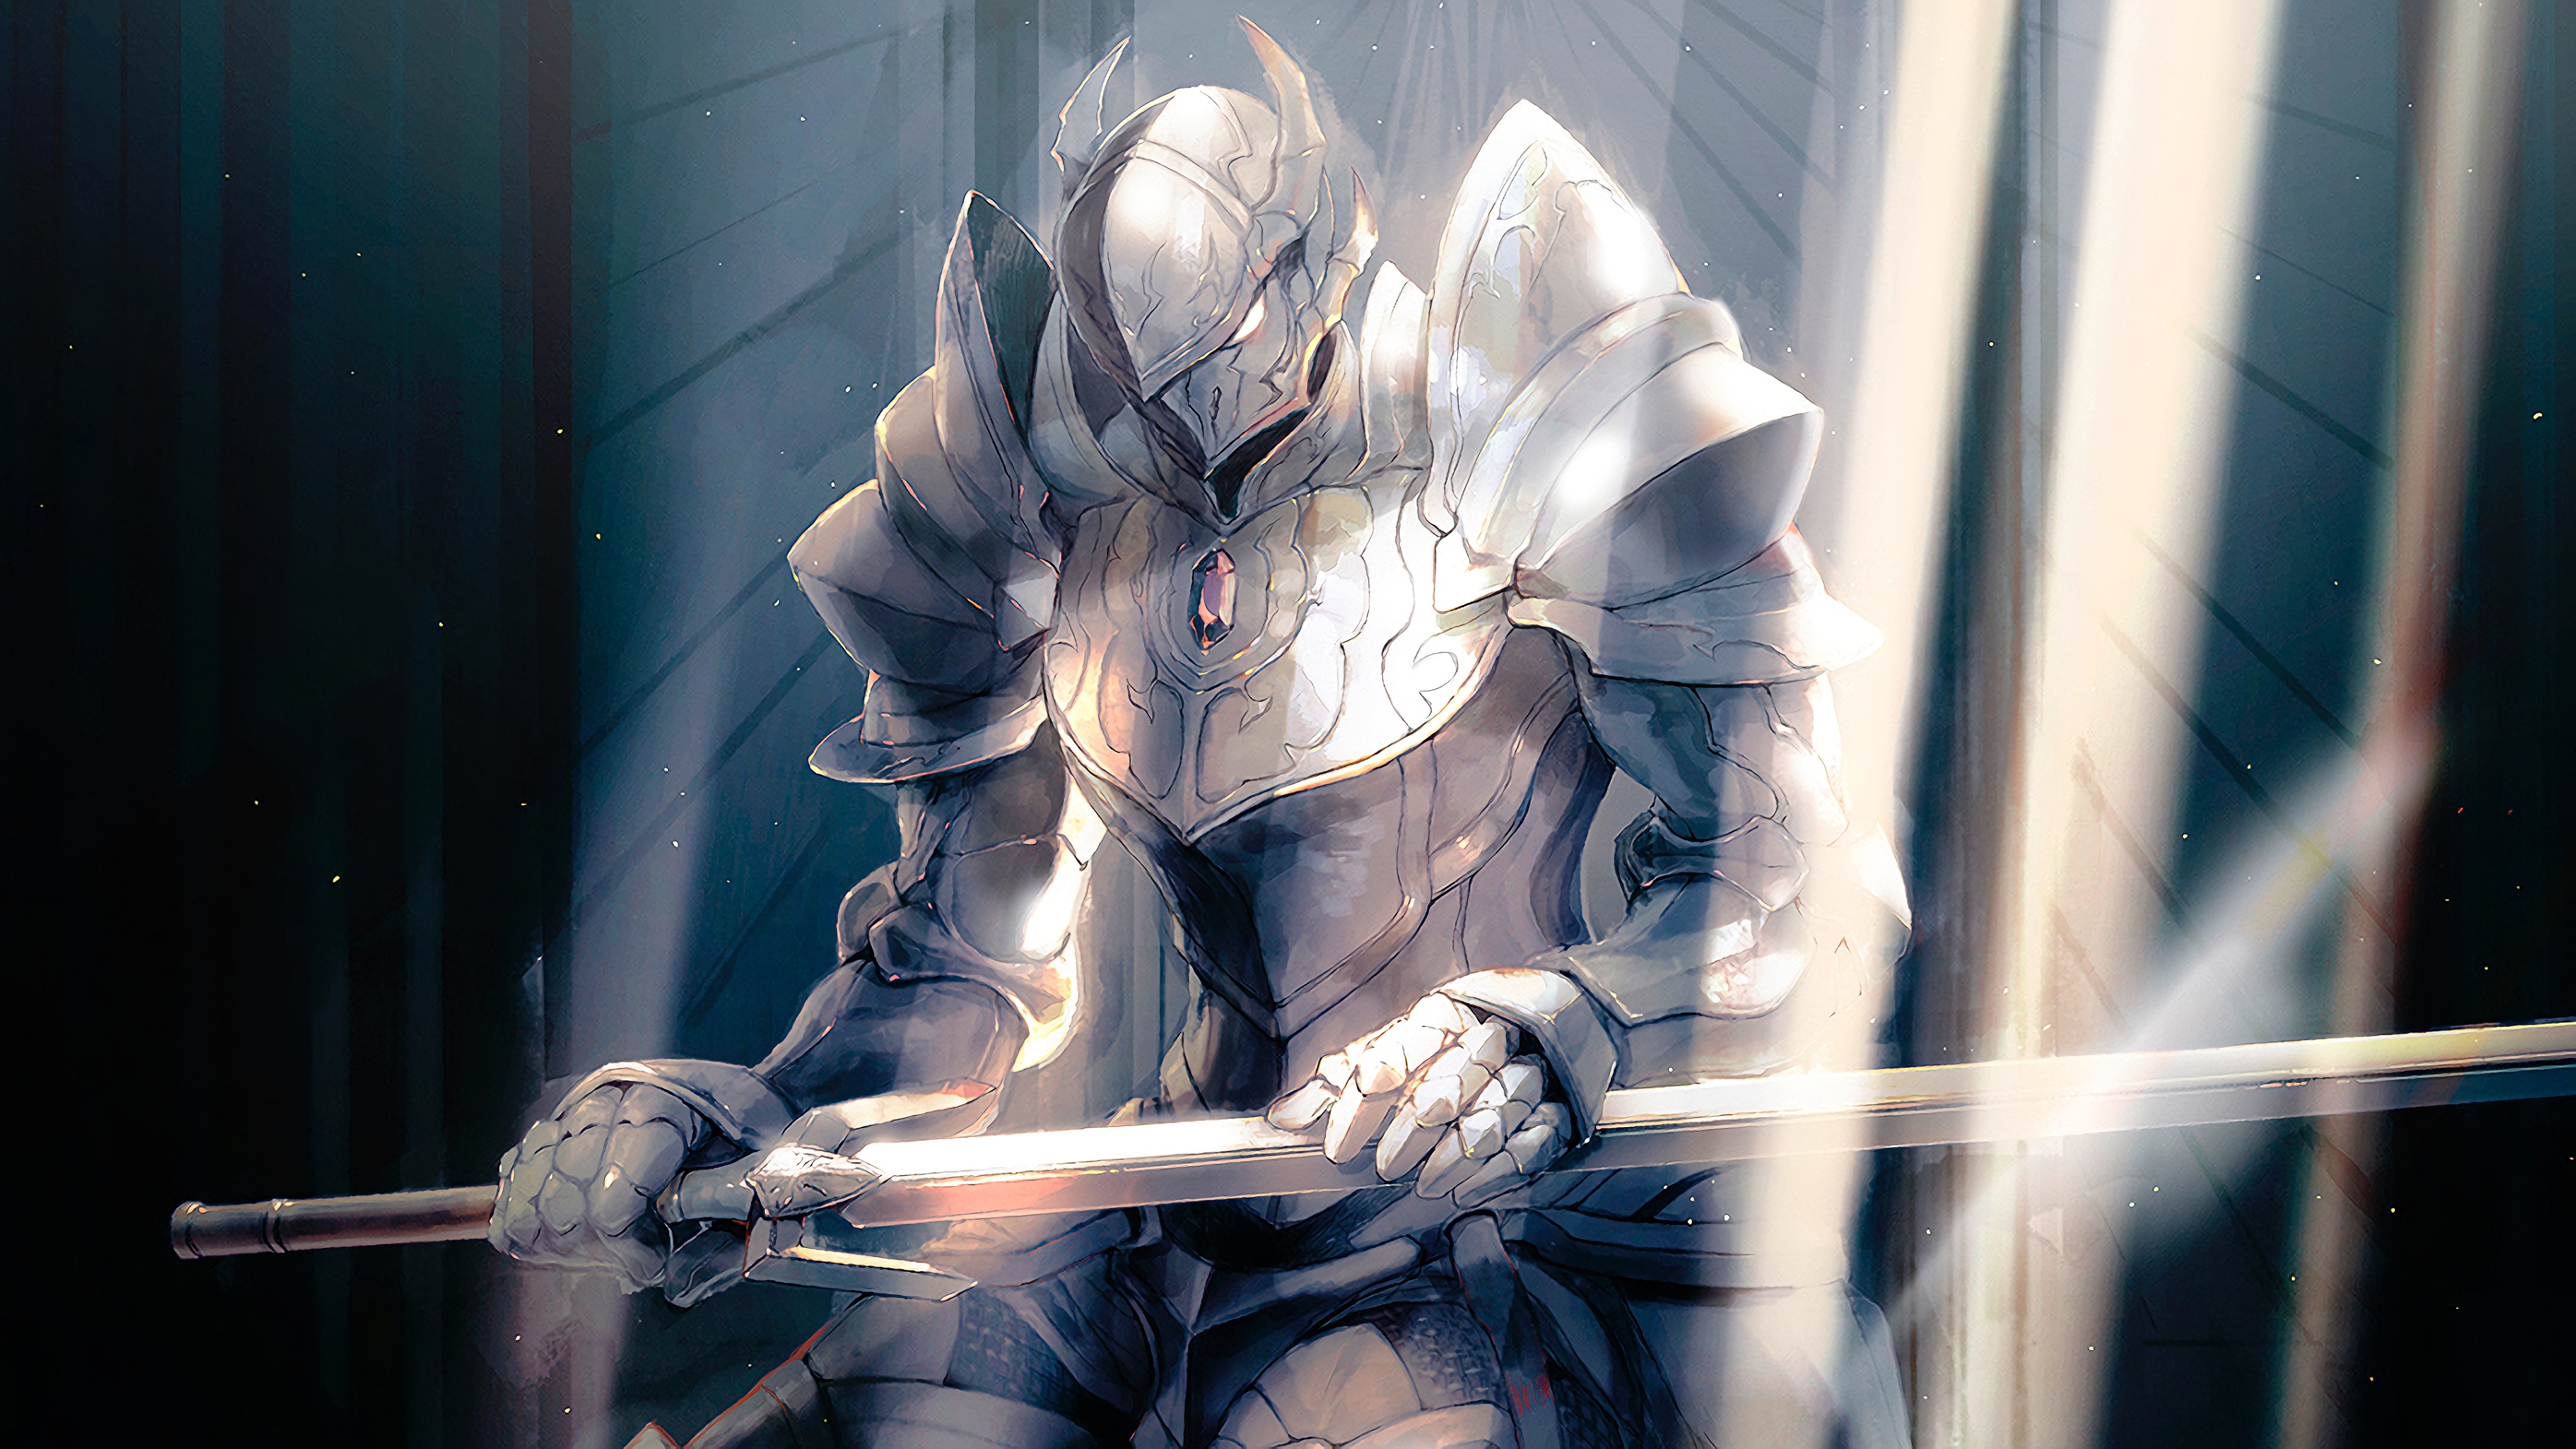 Armor Helmet Overlord Anime Sword Touch Me Overlord 3840x2160